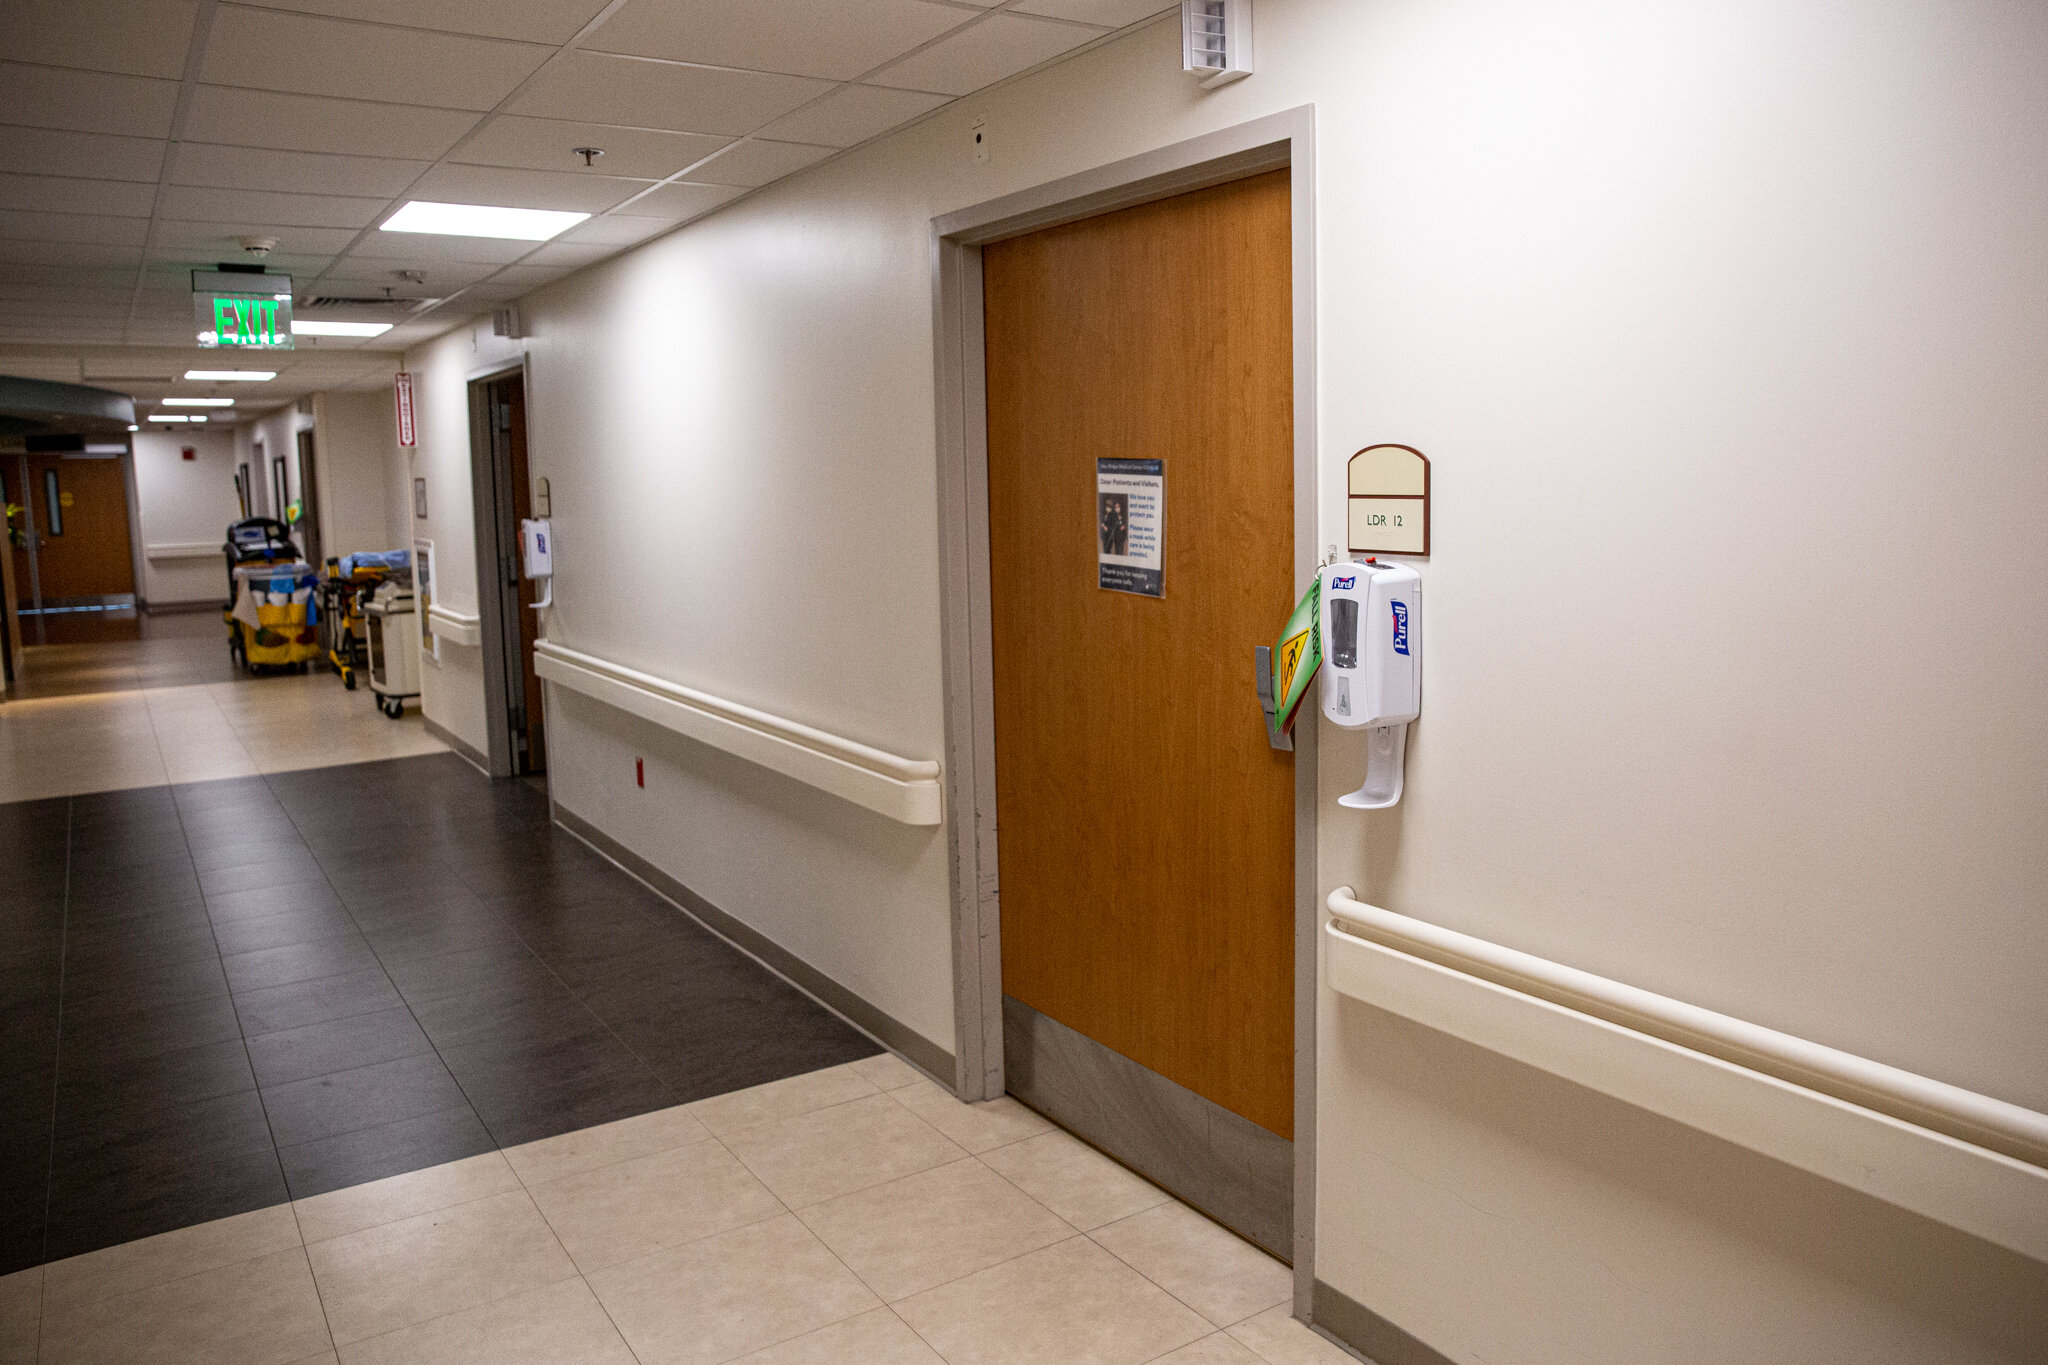 A door in a hospital hallway